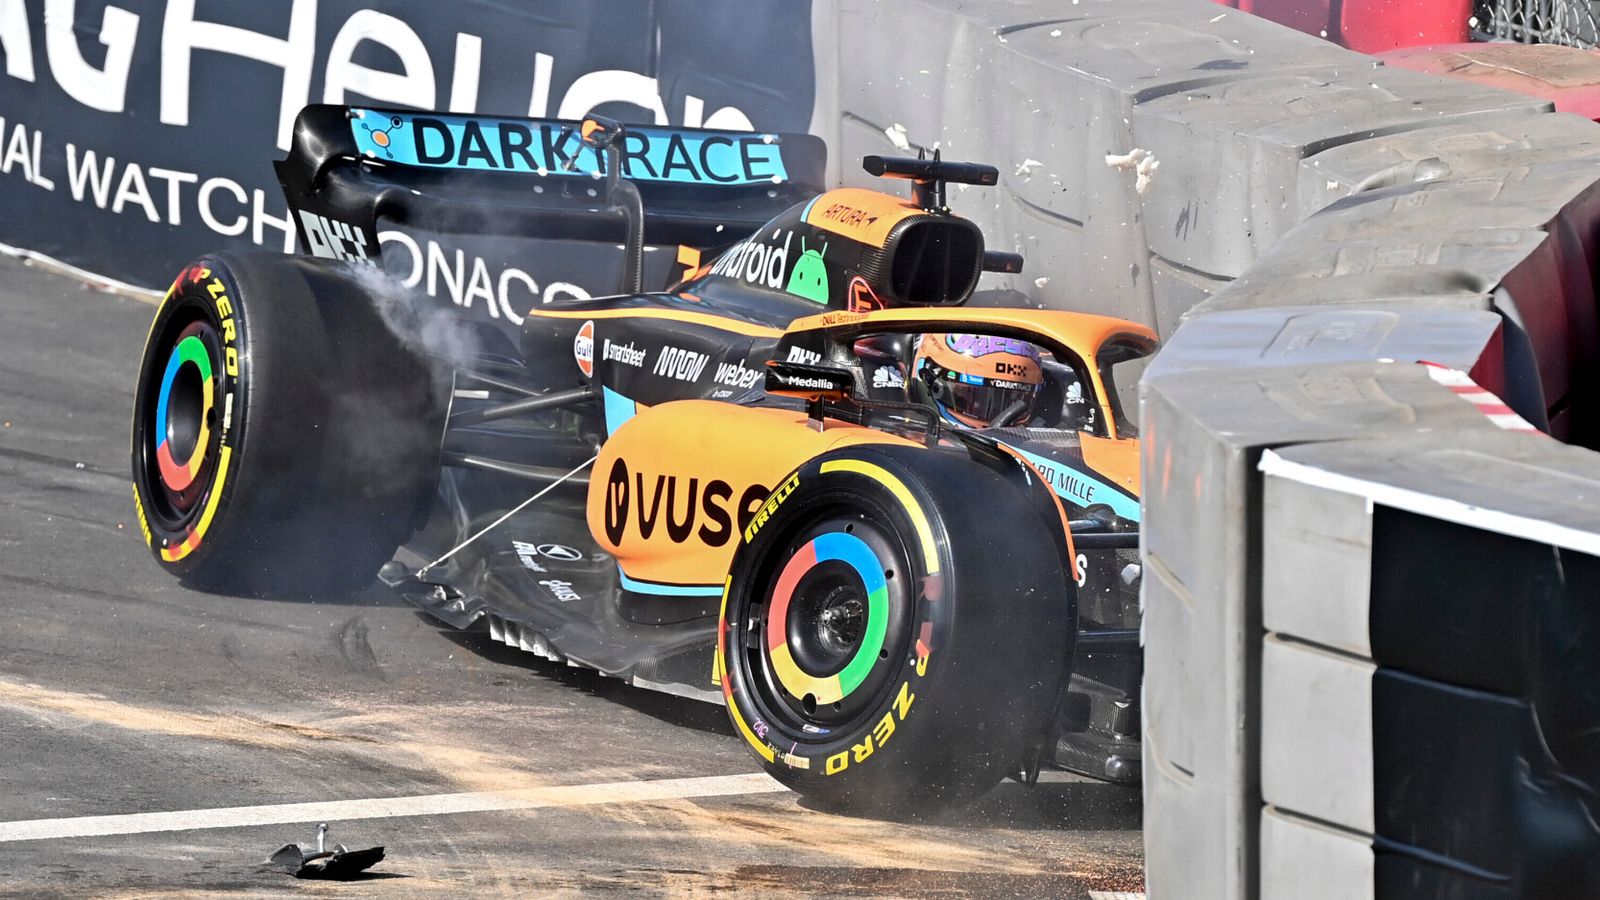 Monaco GP: Daniel Ricciardo vows to ‘bounce back’ after crashing McLaren in Practice Two